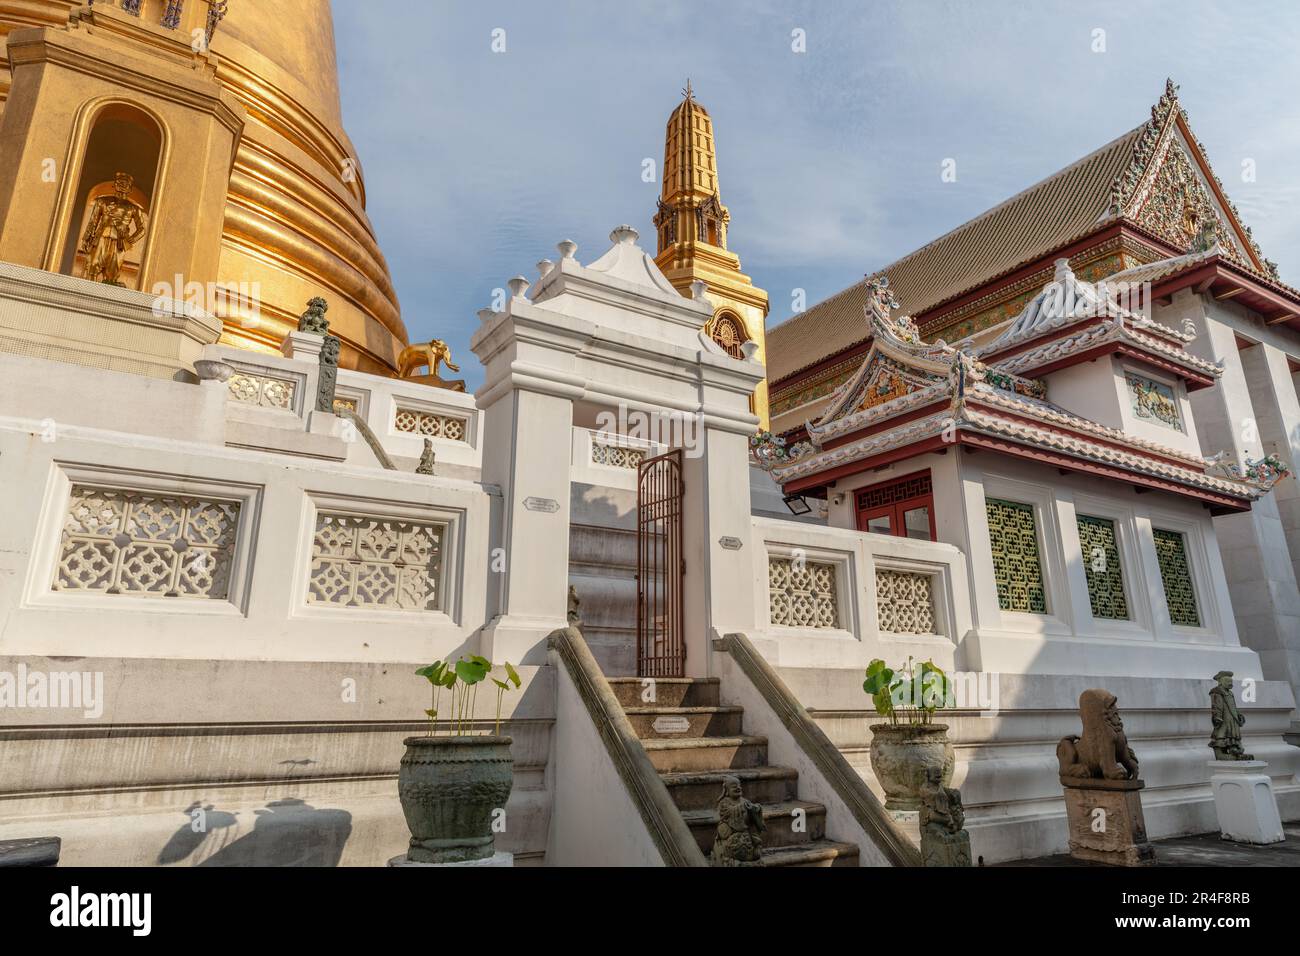 Golden chedi (stupa) de Wat Bowonniwetwiharn Ratchaworawiharn (Wat Bowonniwet Vihara) - temple bouddhiste thaïlandais majeur à Bangkok, Thaïlande Banque D'Images